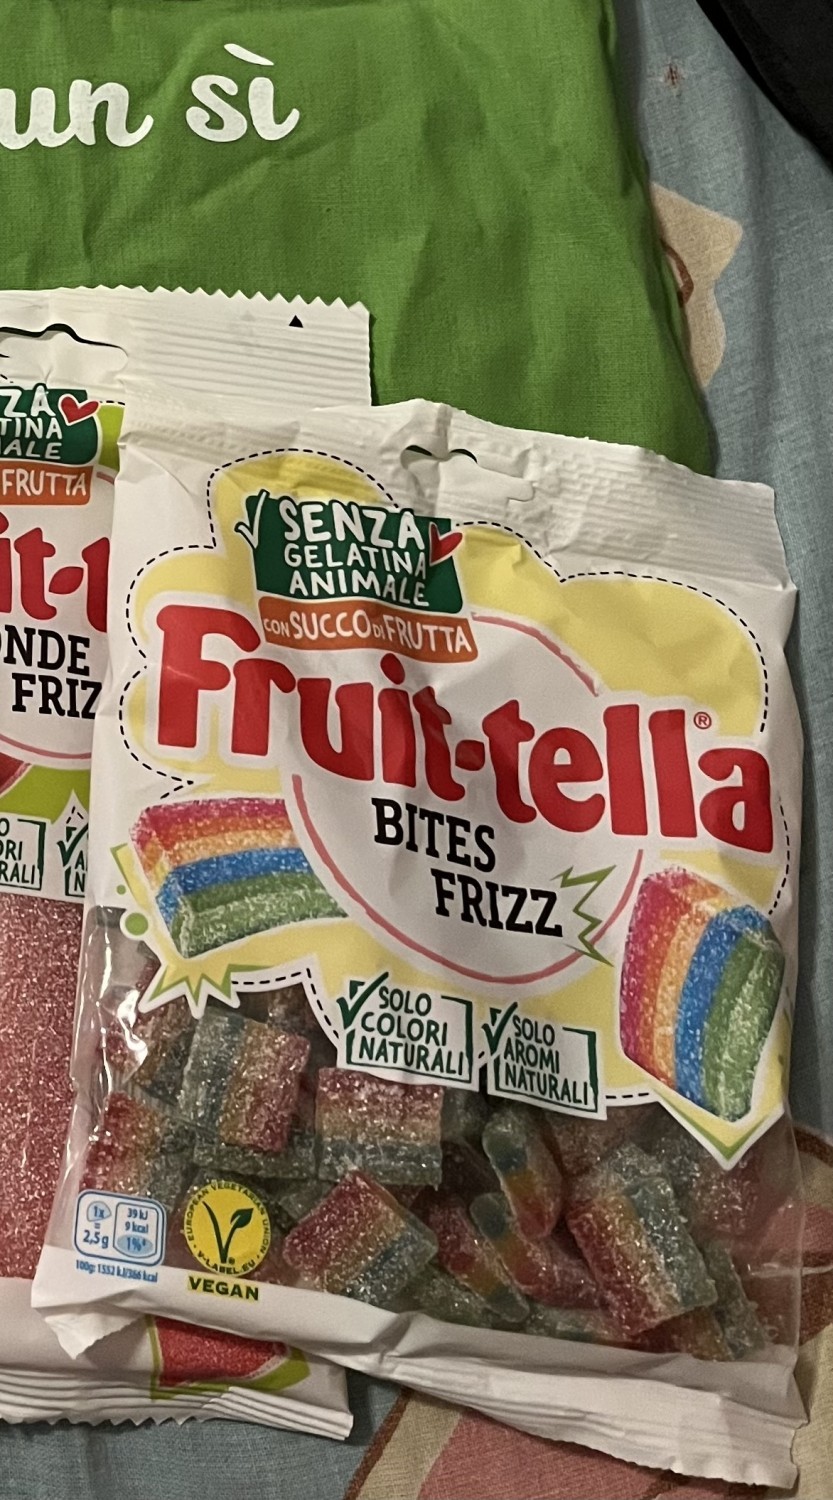 Fruit-tella bites frizz